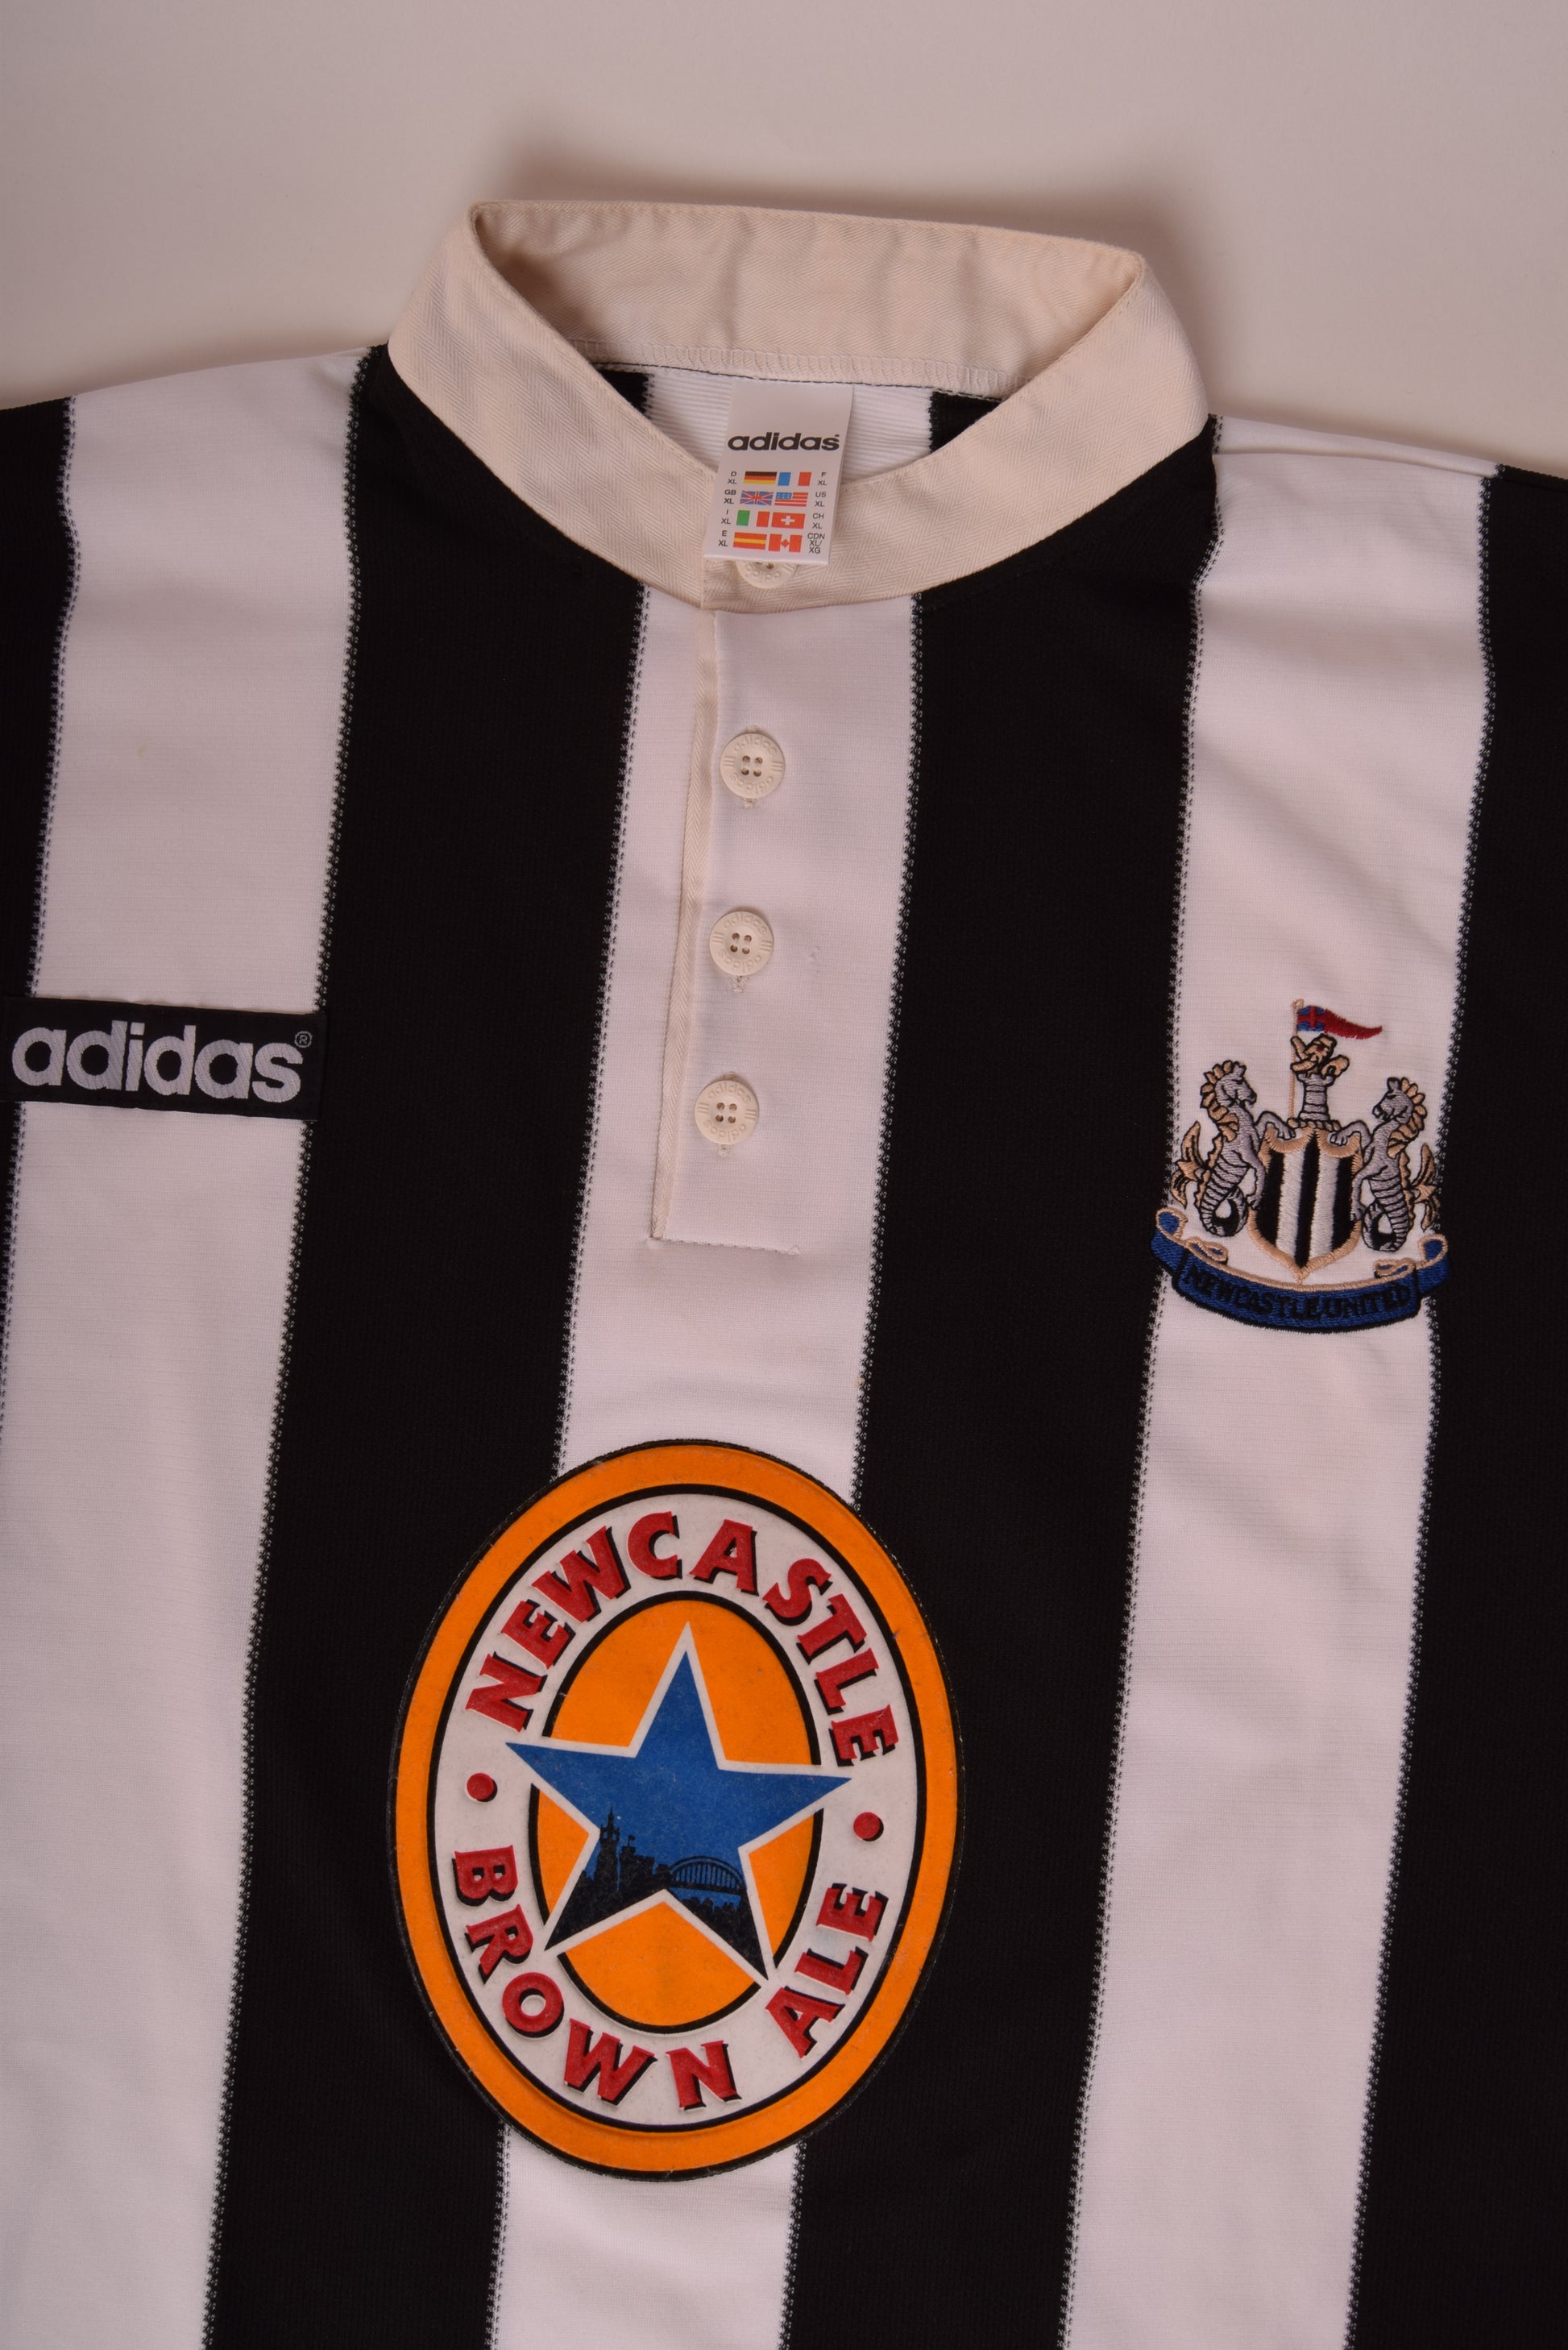 Vintage Newcastle Adidas Home Football Shirt 1995-1997 Black White #10 Size XL